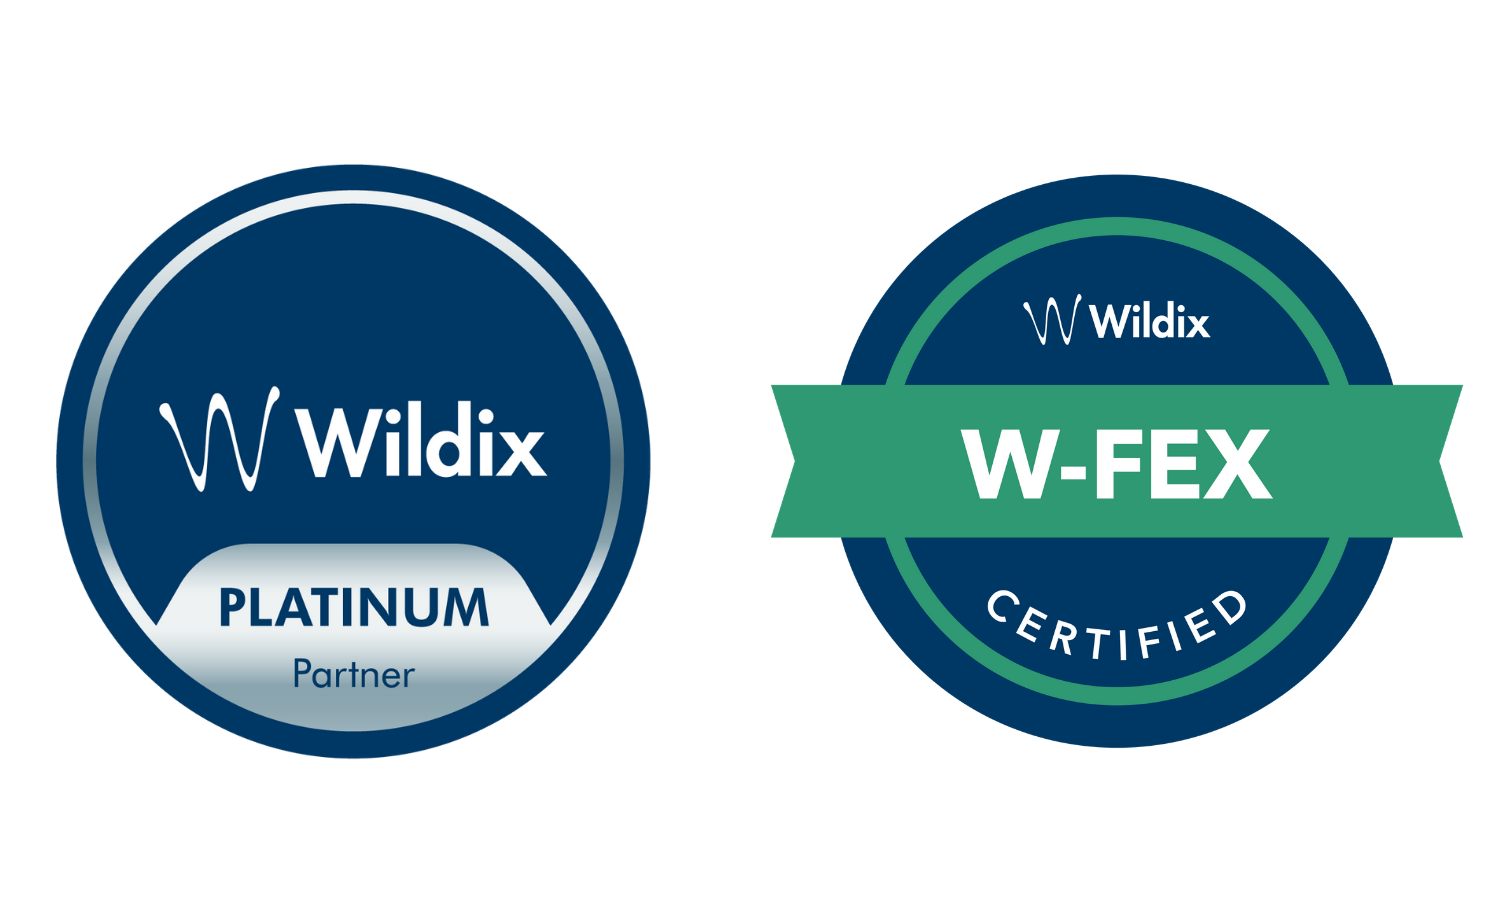 Wildix, Cloud, VoIP Phone Solution Wildix Platinum Partner & W-FEX certified badges.